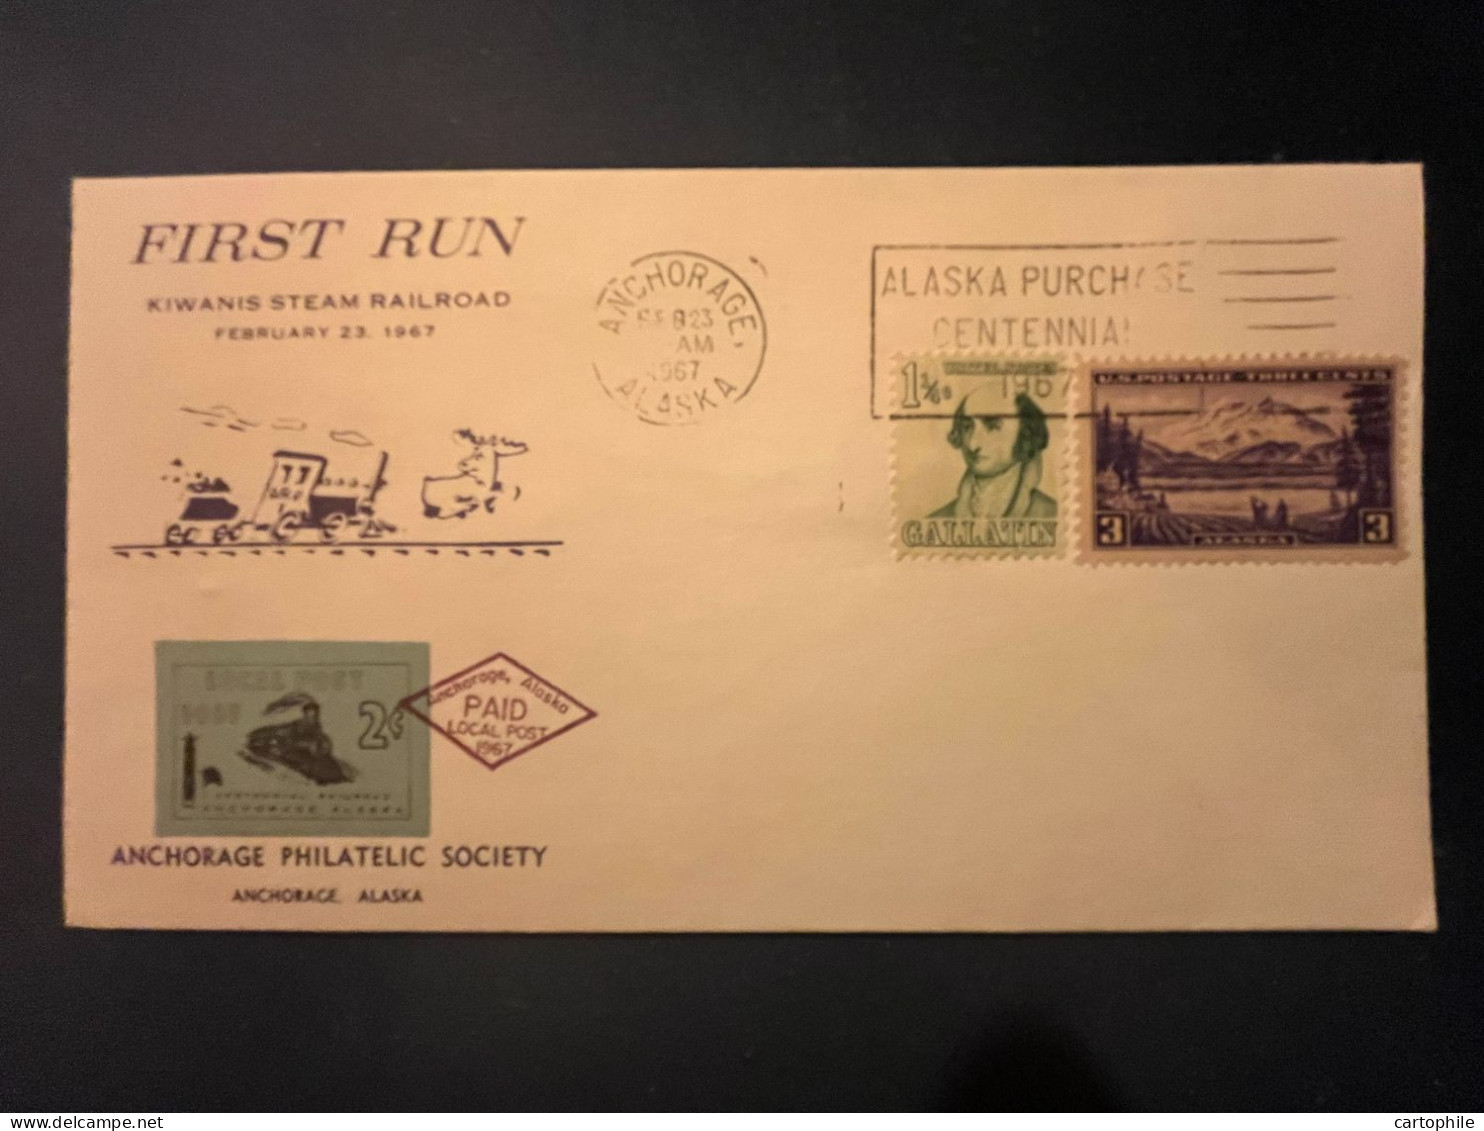 Local Post Anchorage Alaska - First Run Kiwanis Steam Railroad Cover 1967 - Timbre Local 2c Centennial Railroad - Lettres & Documents